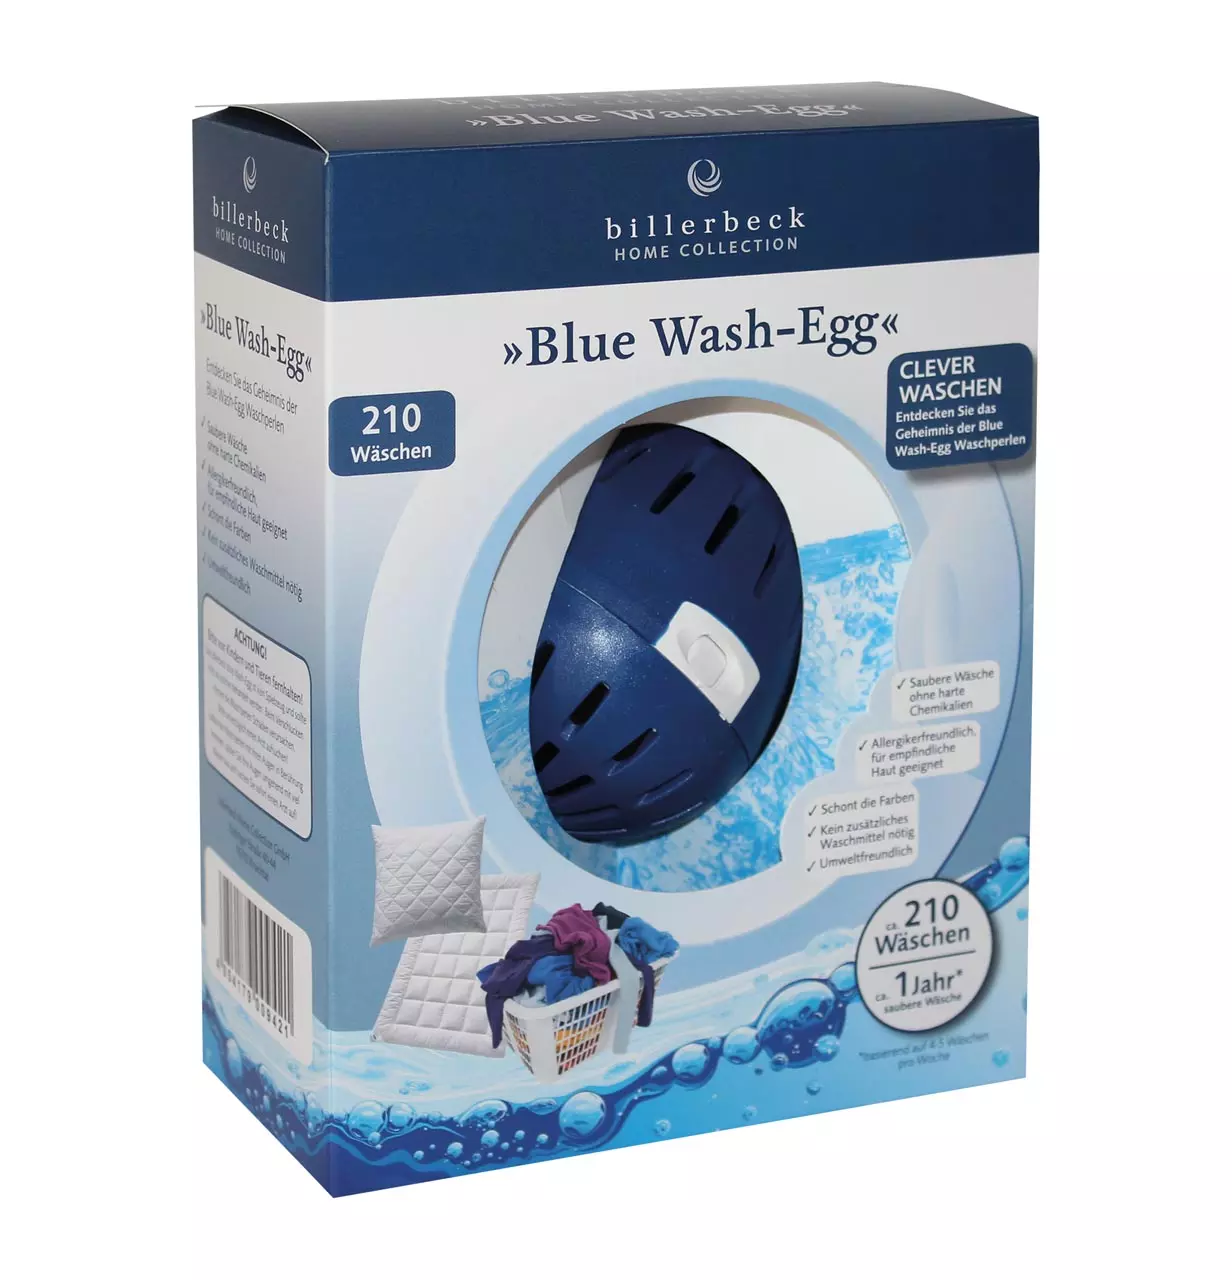 billerbeck-blue-wash-egg_organic-detergent_packaging-carton
